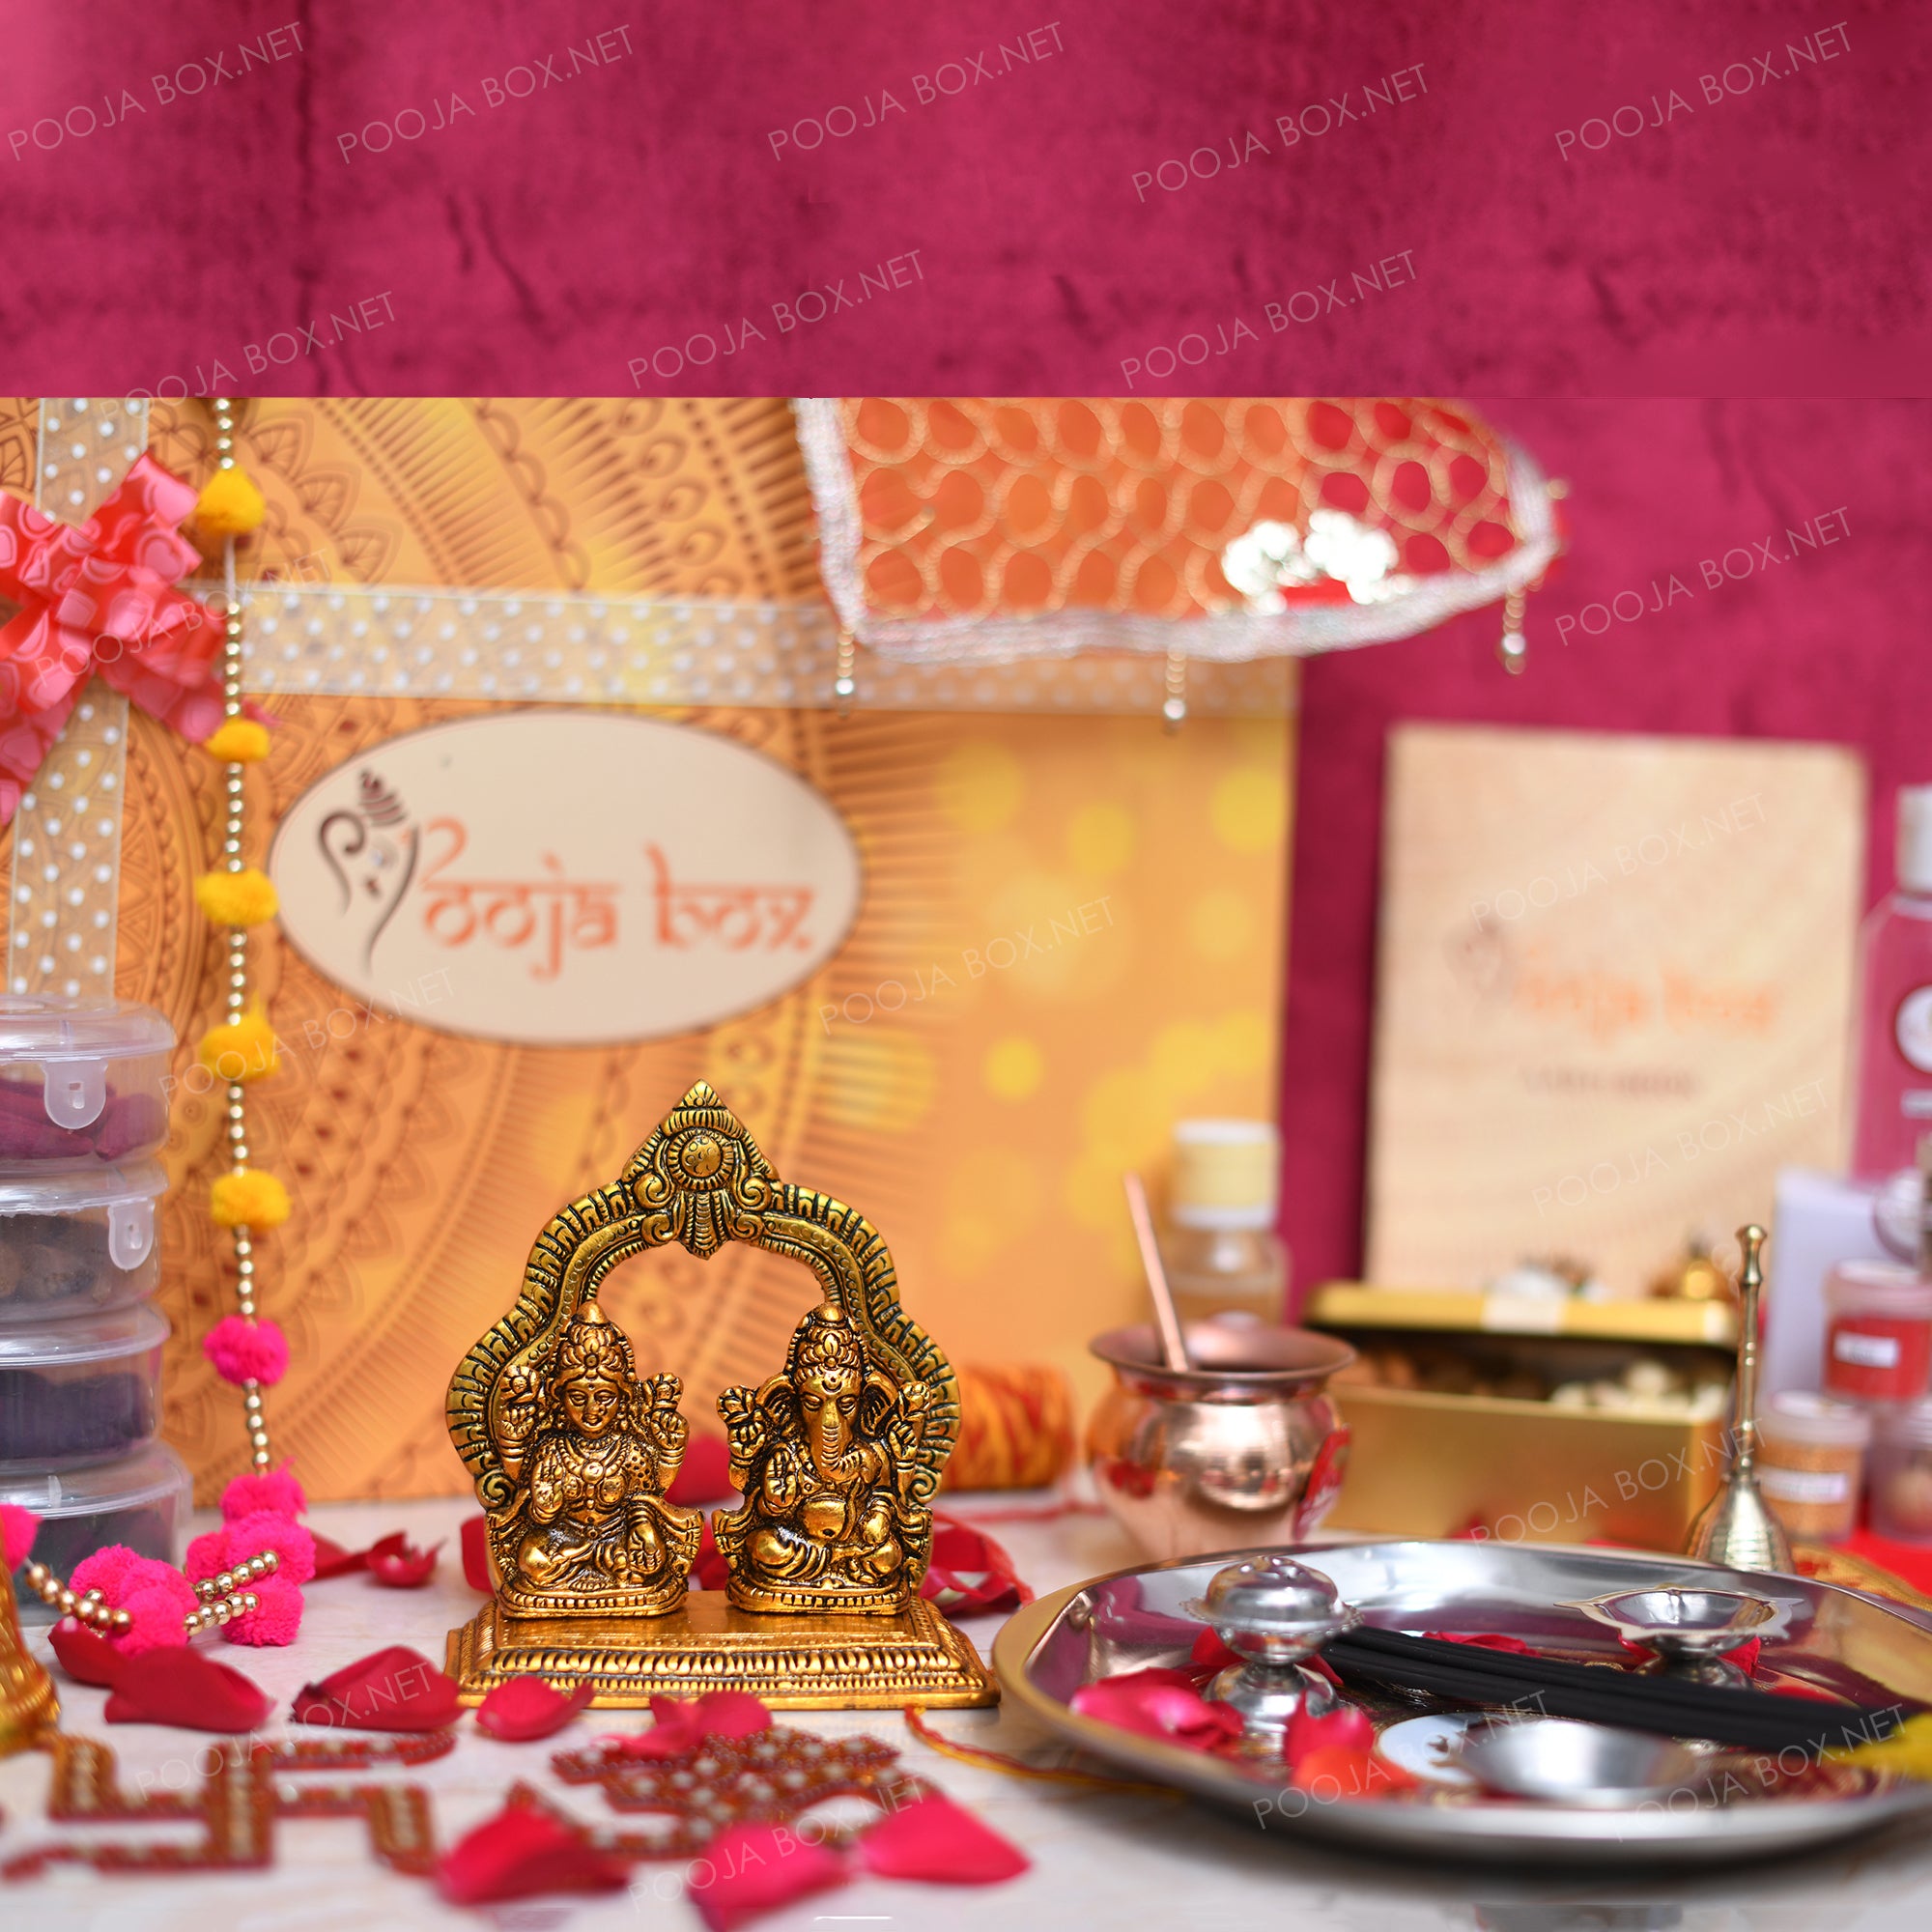 Shubh Labh Diwali Pooja Box